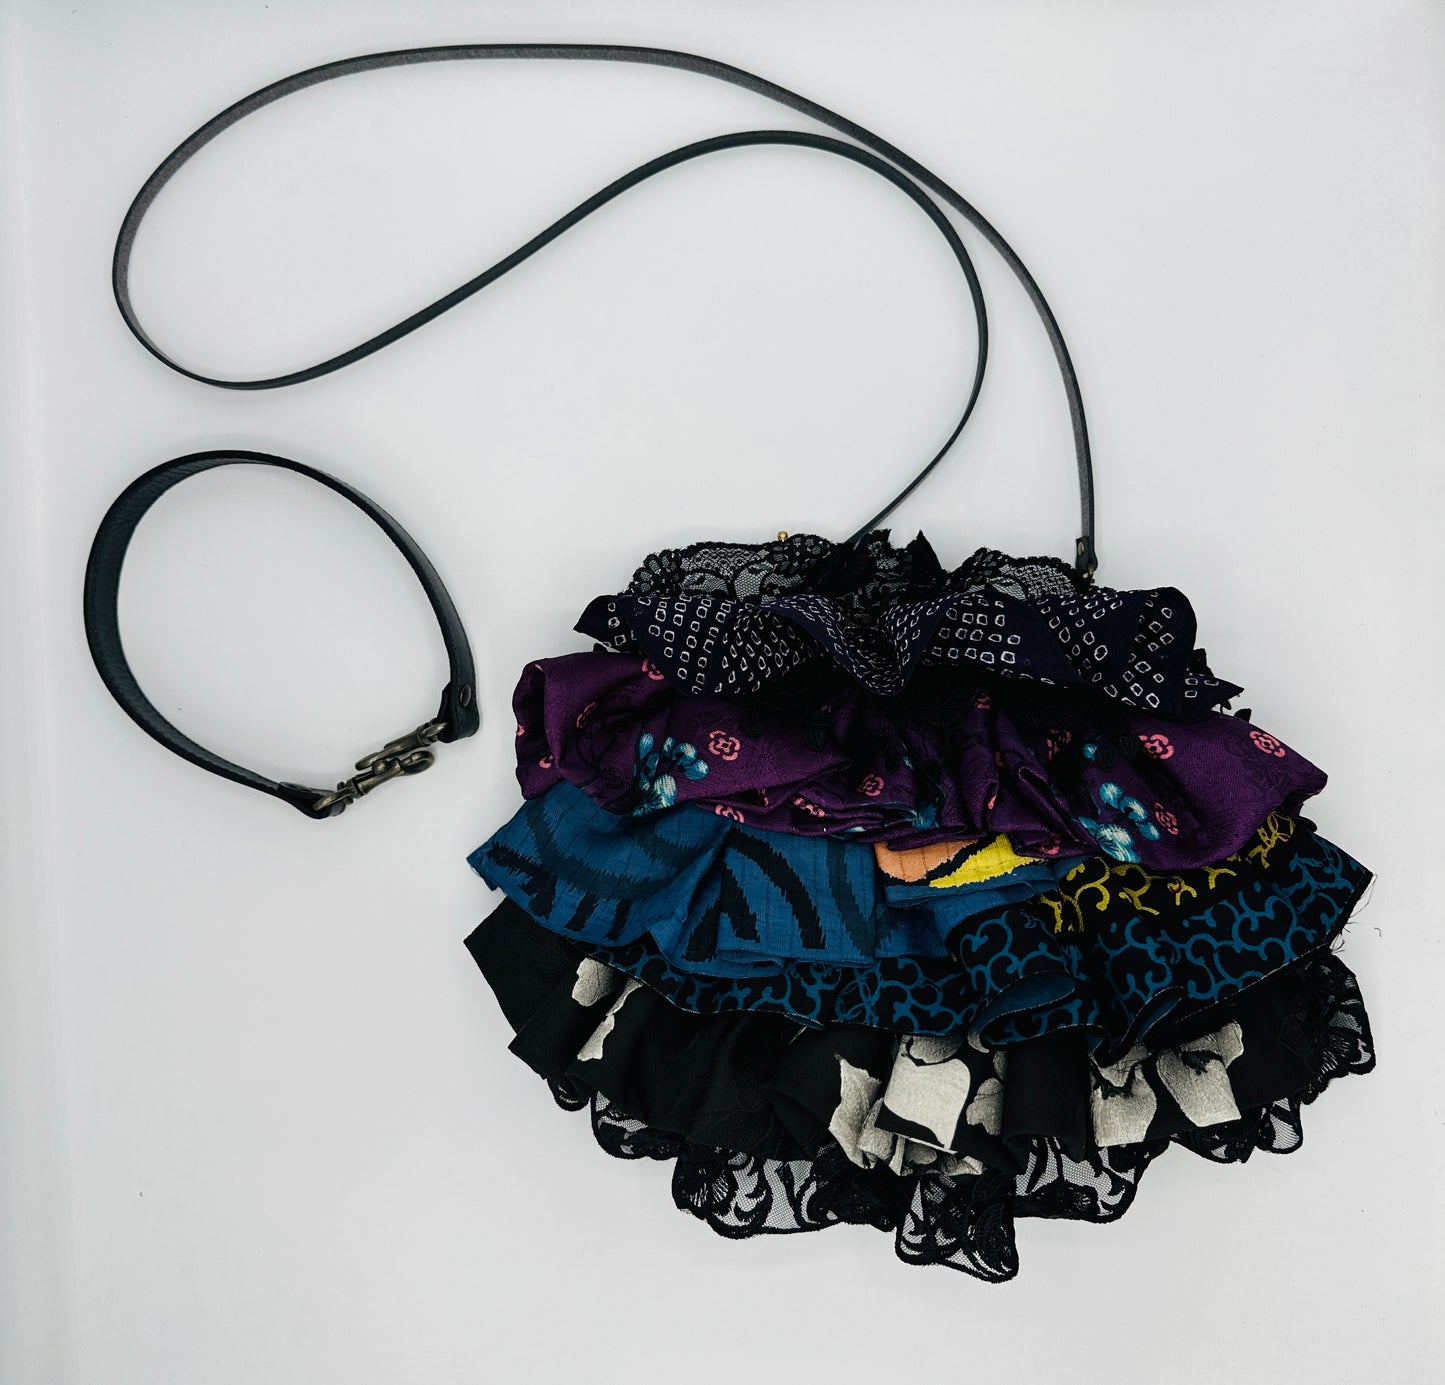 【Gogatsudo】3WAY-Handbag/Black,antique meisen,frills,Clutch,Pouch,Japanese bag,Shoulder bag,Japanese Gifts